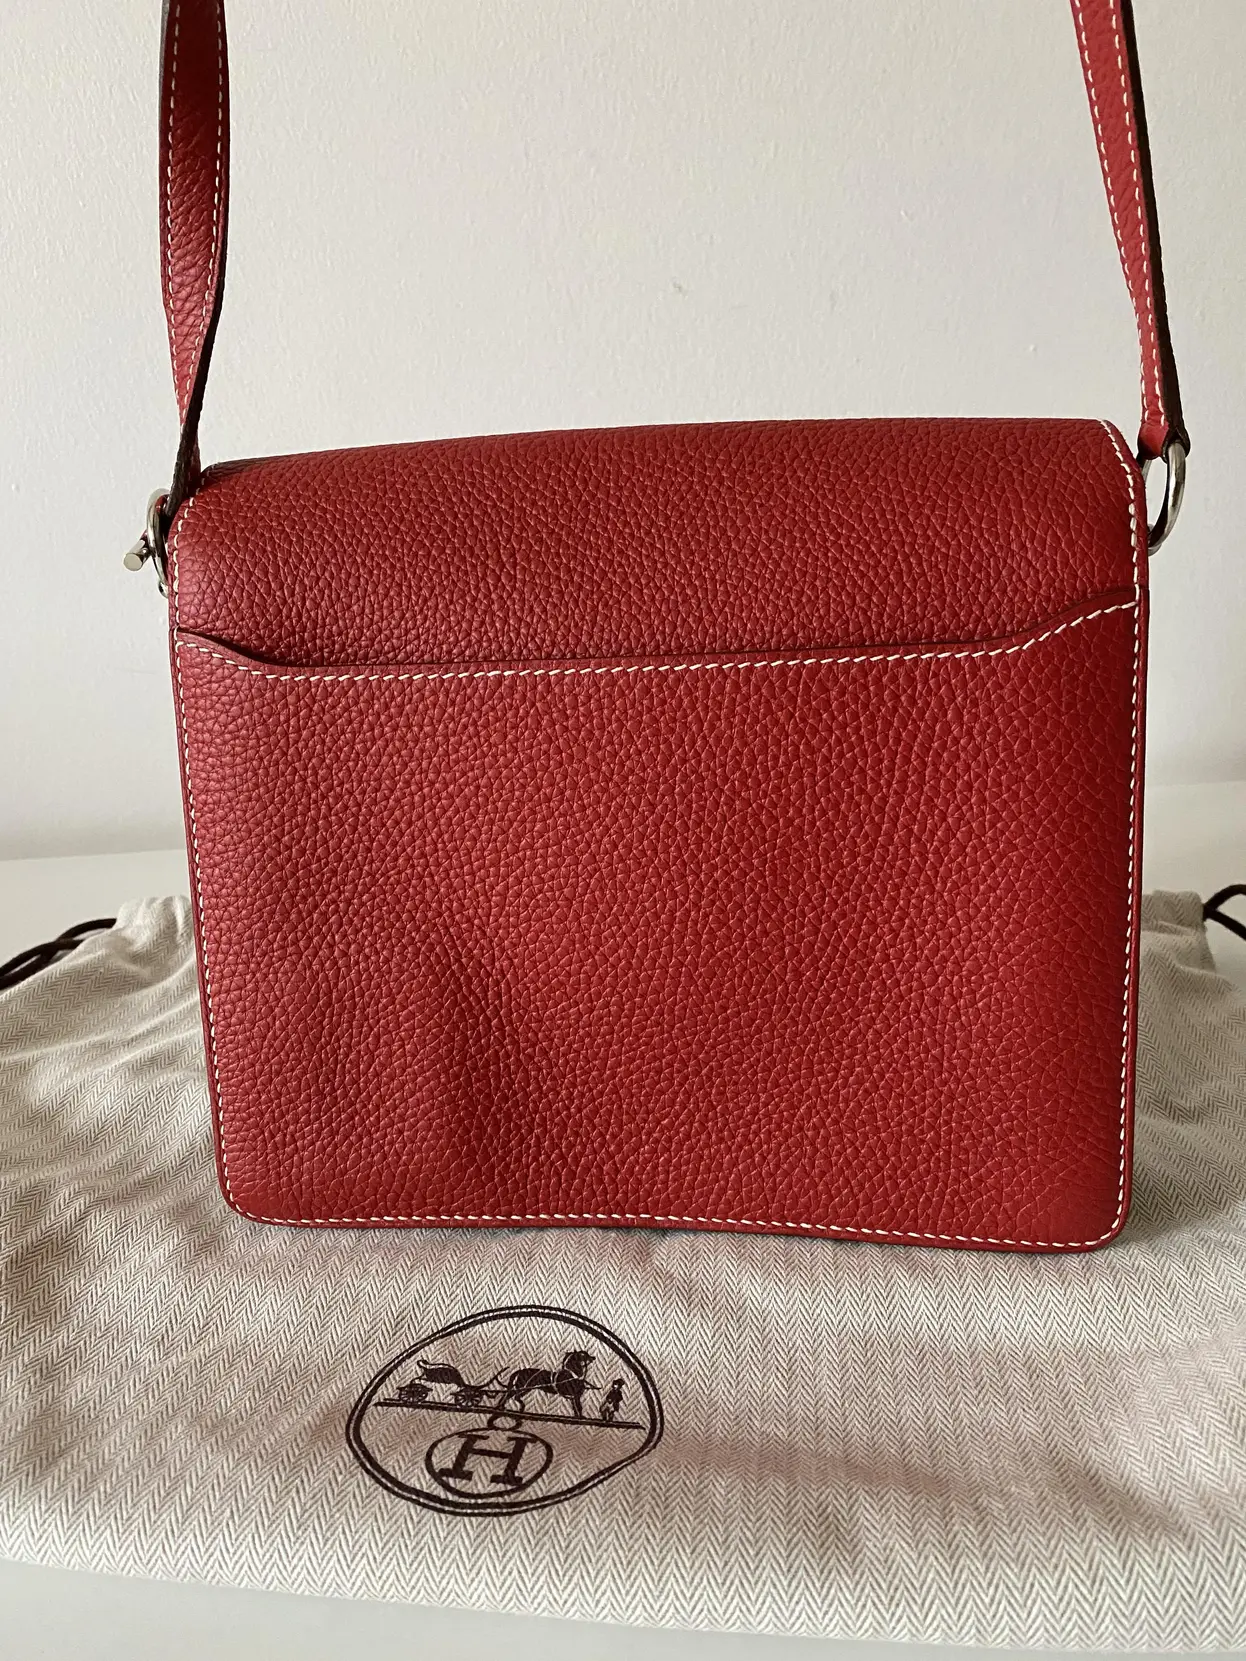 Buy Hermès Roulis leather crossbody bag online